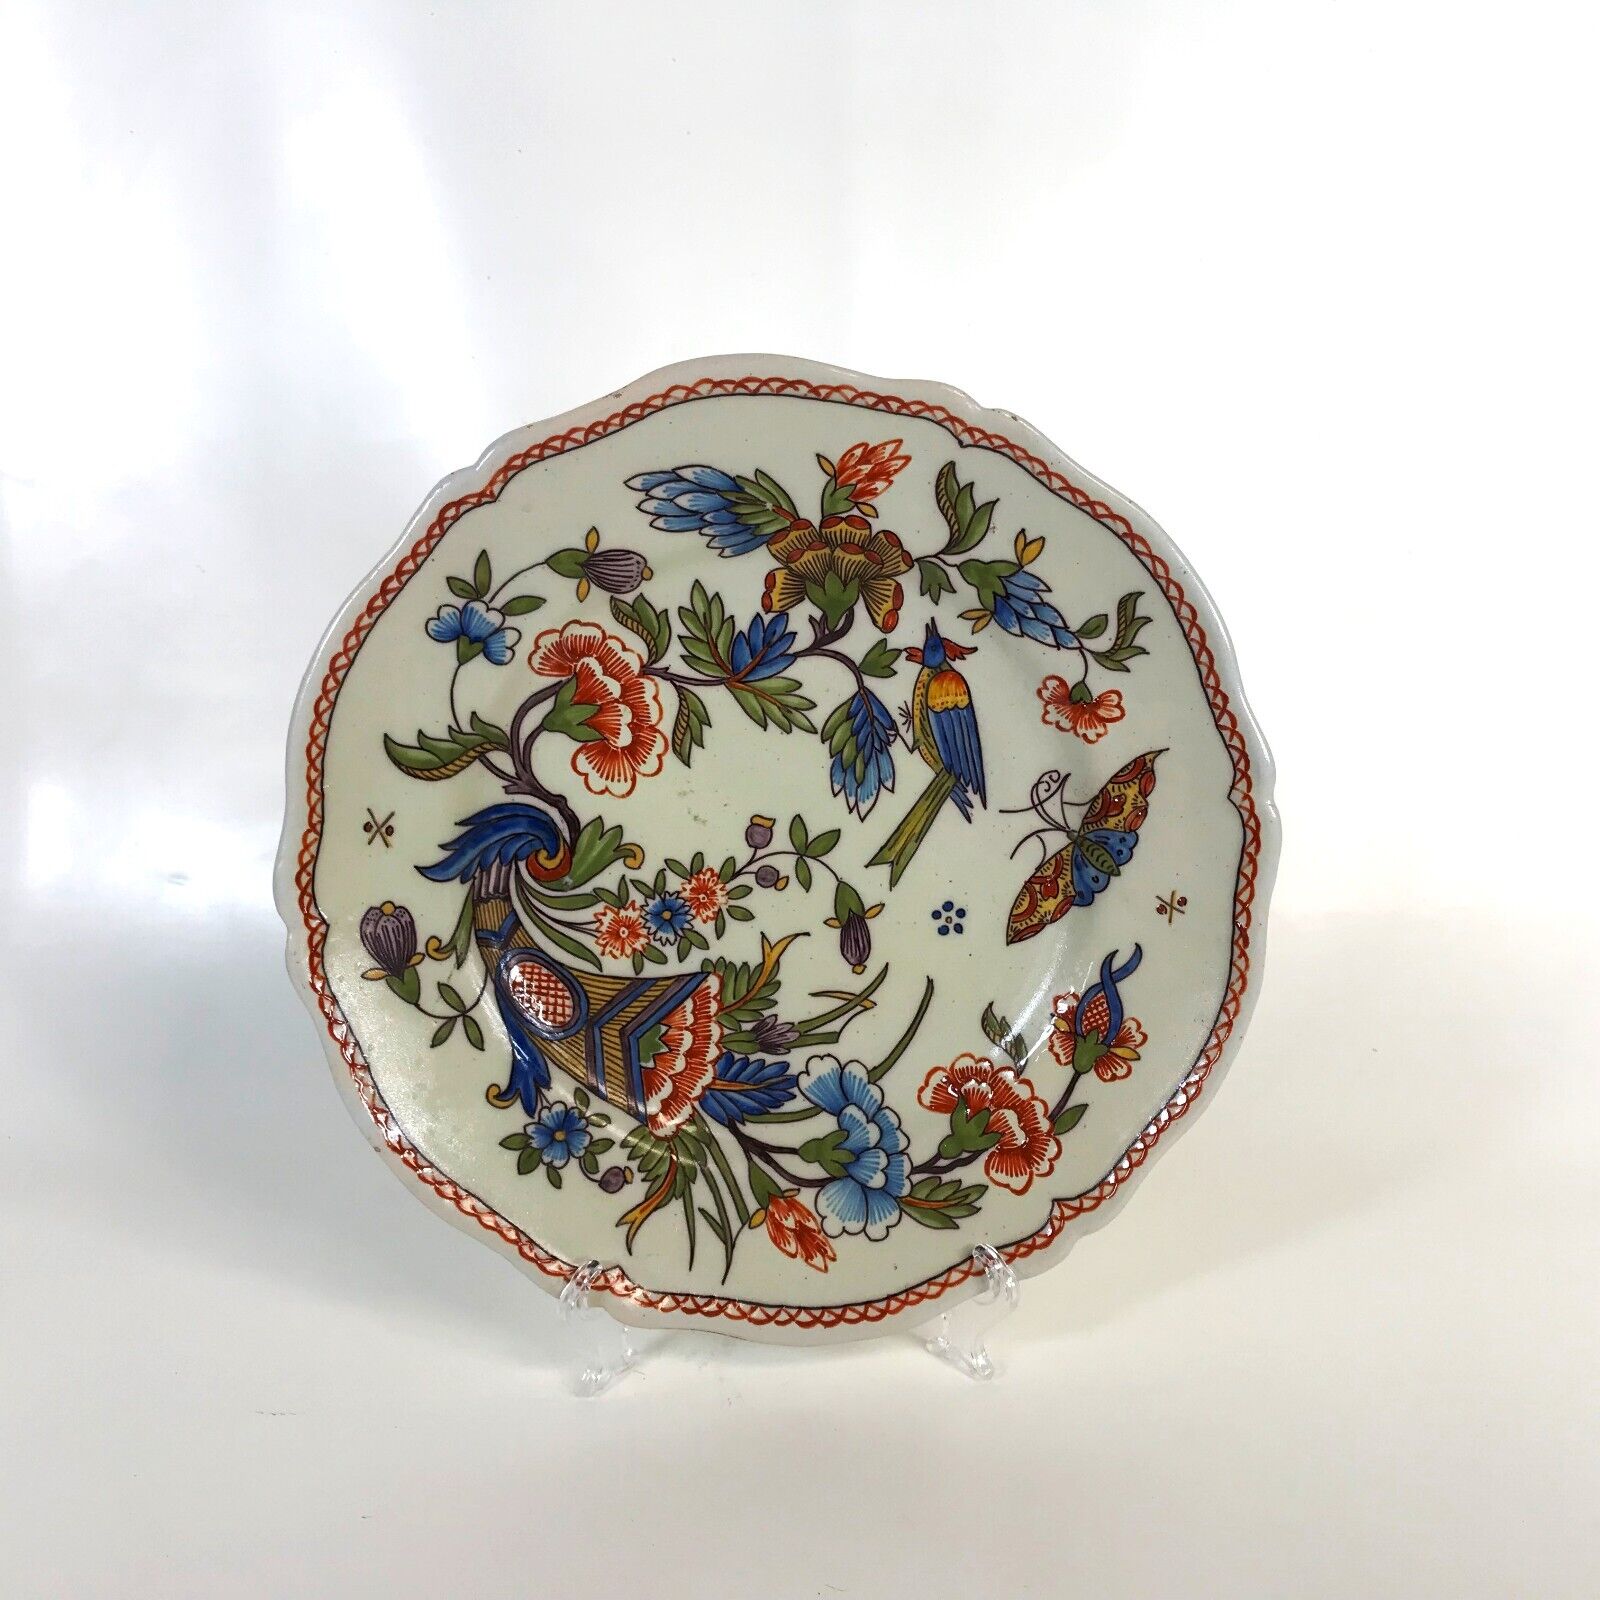 C. 1900 Rouen Faience Pottery Plate